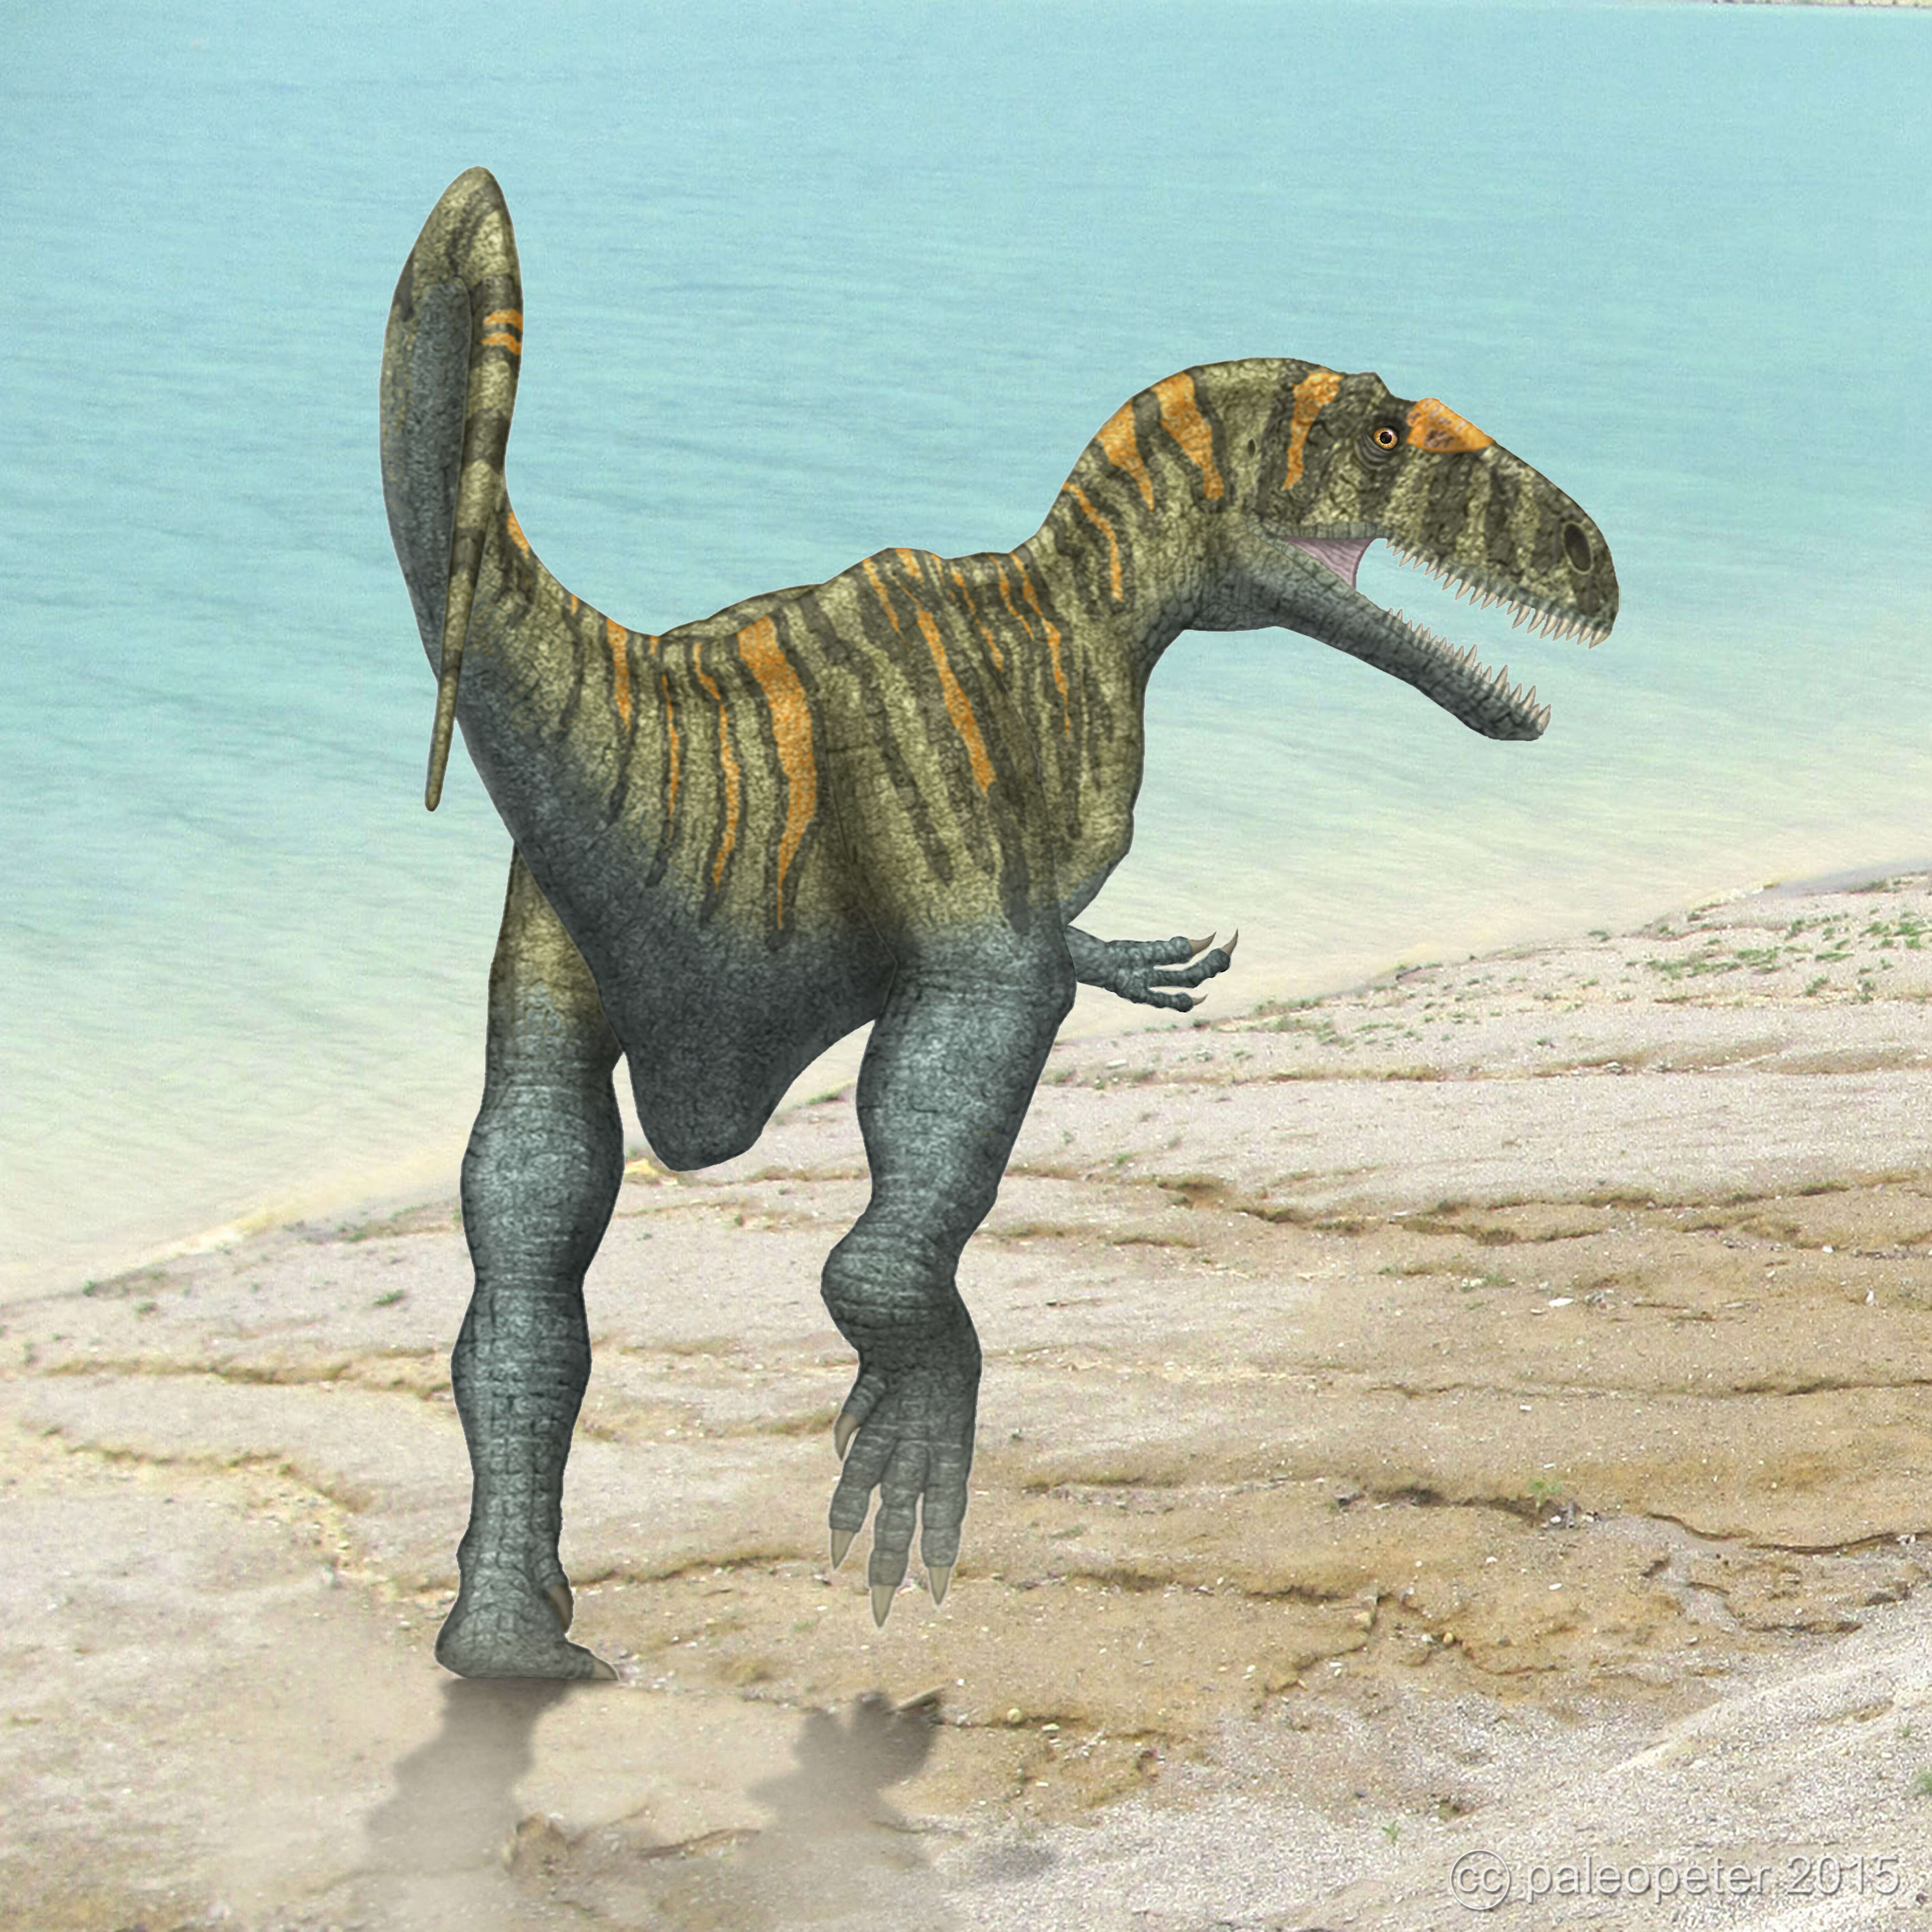 Image of allosauroid